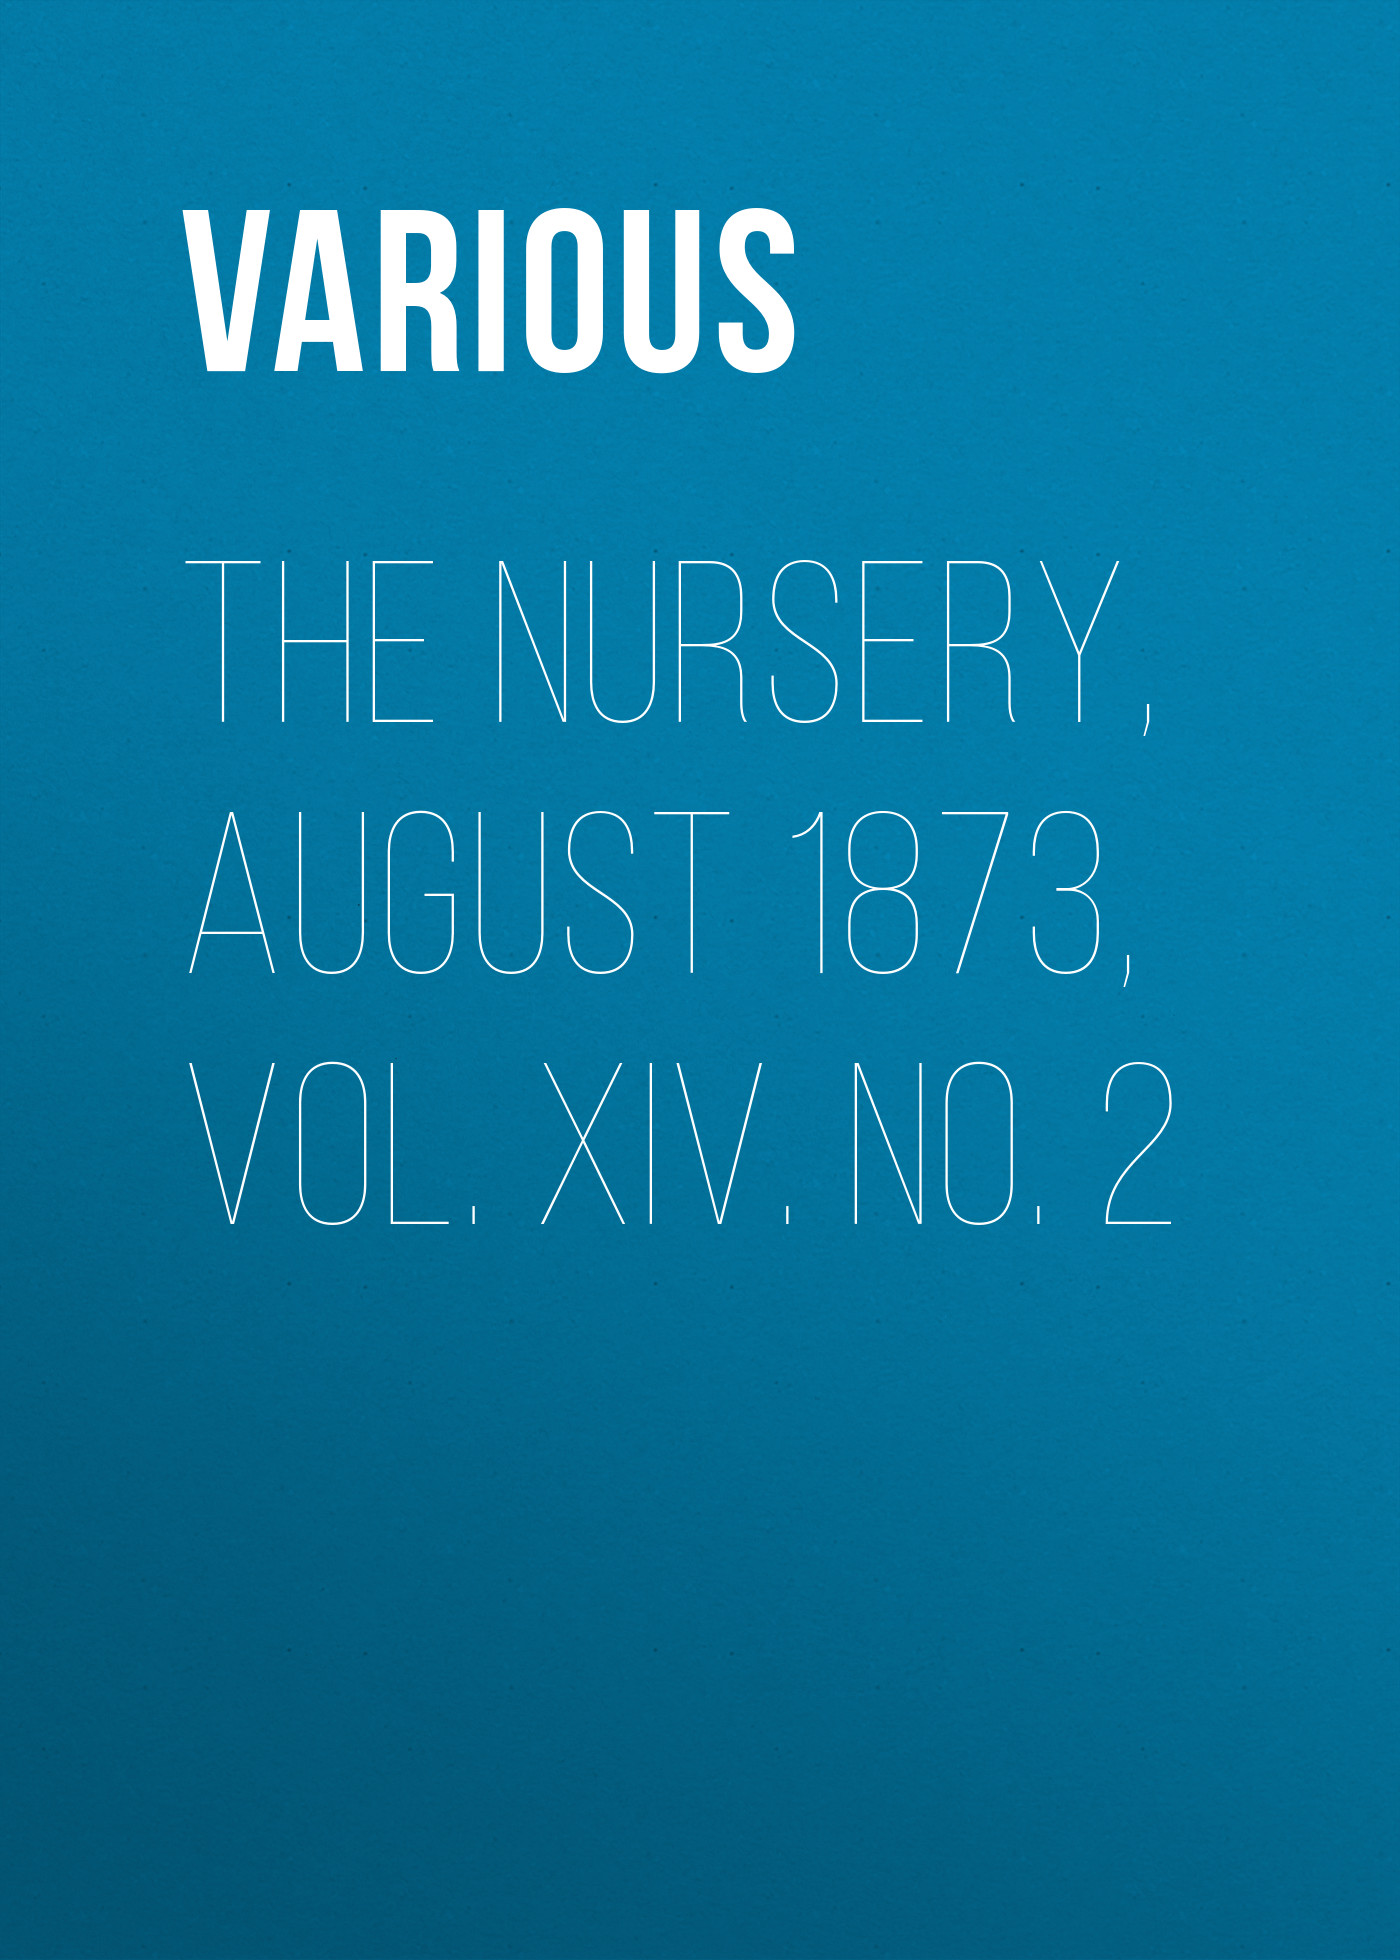 The Nursery, August 1873, Vol. XIV. No. 2